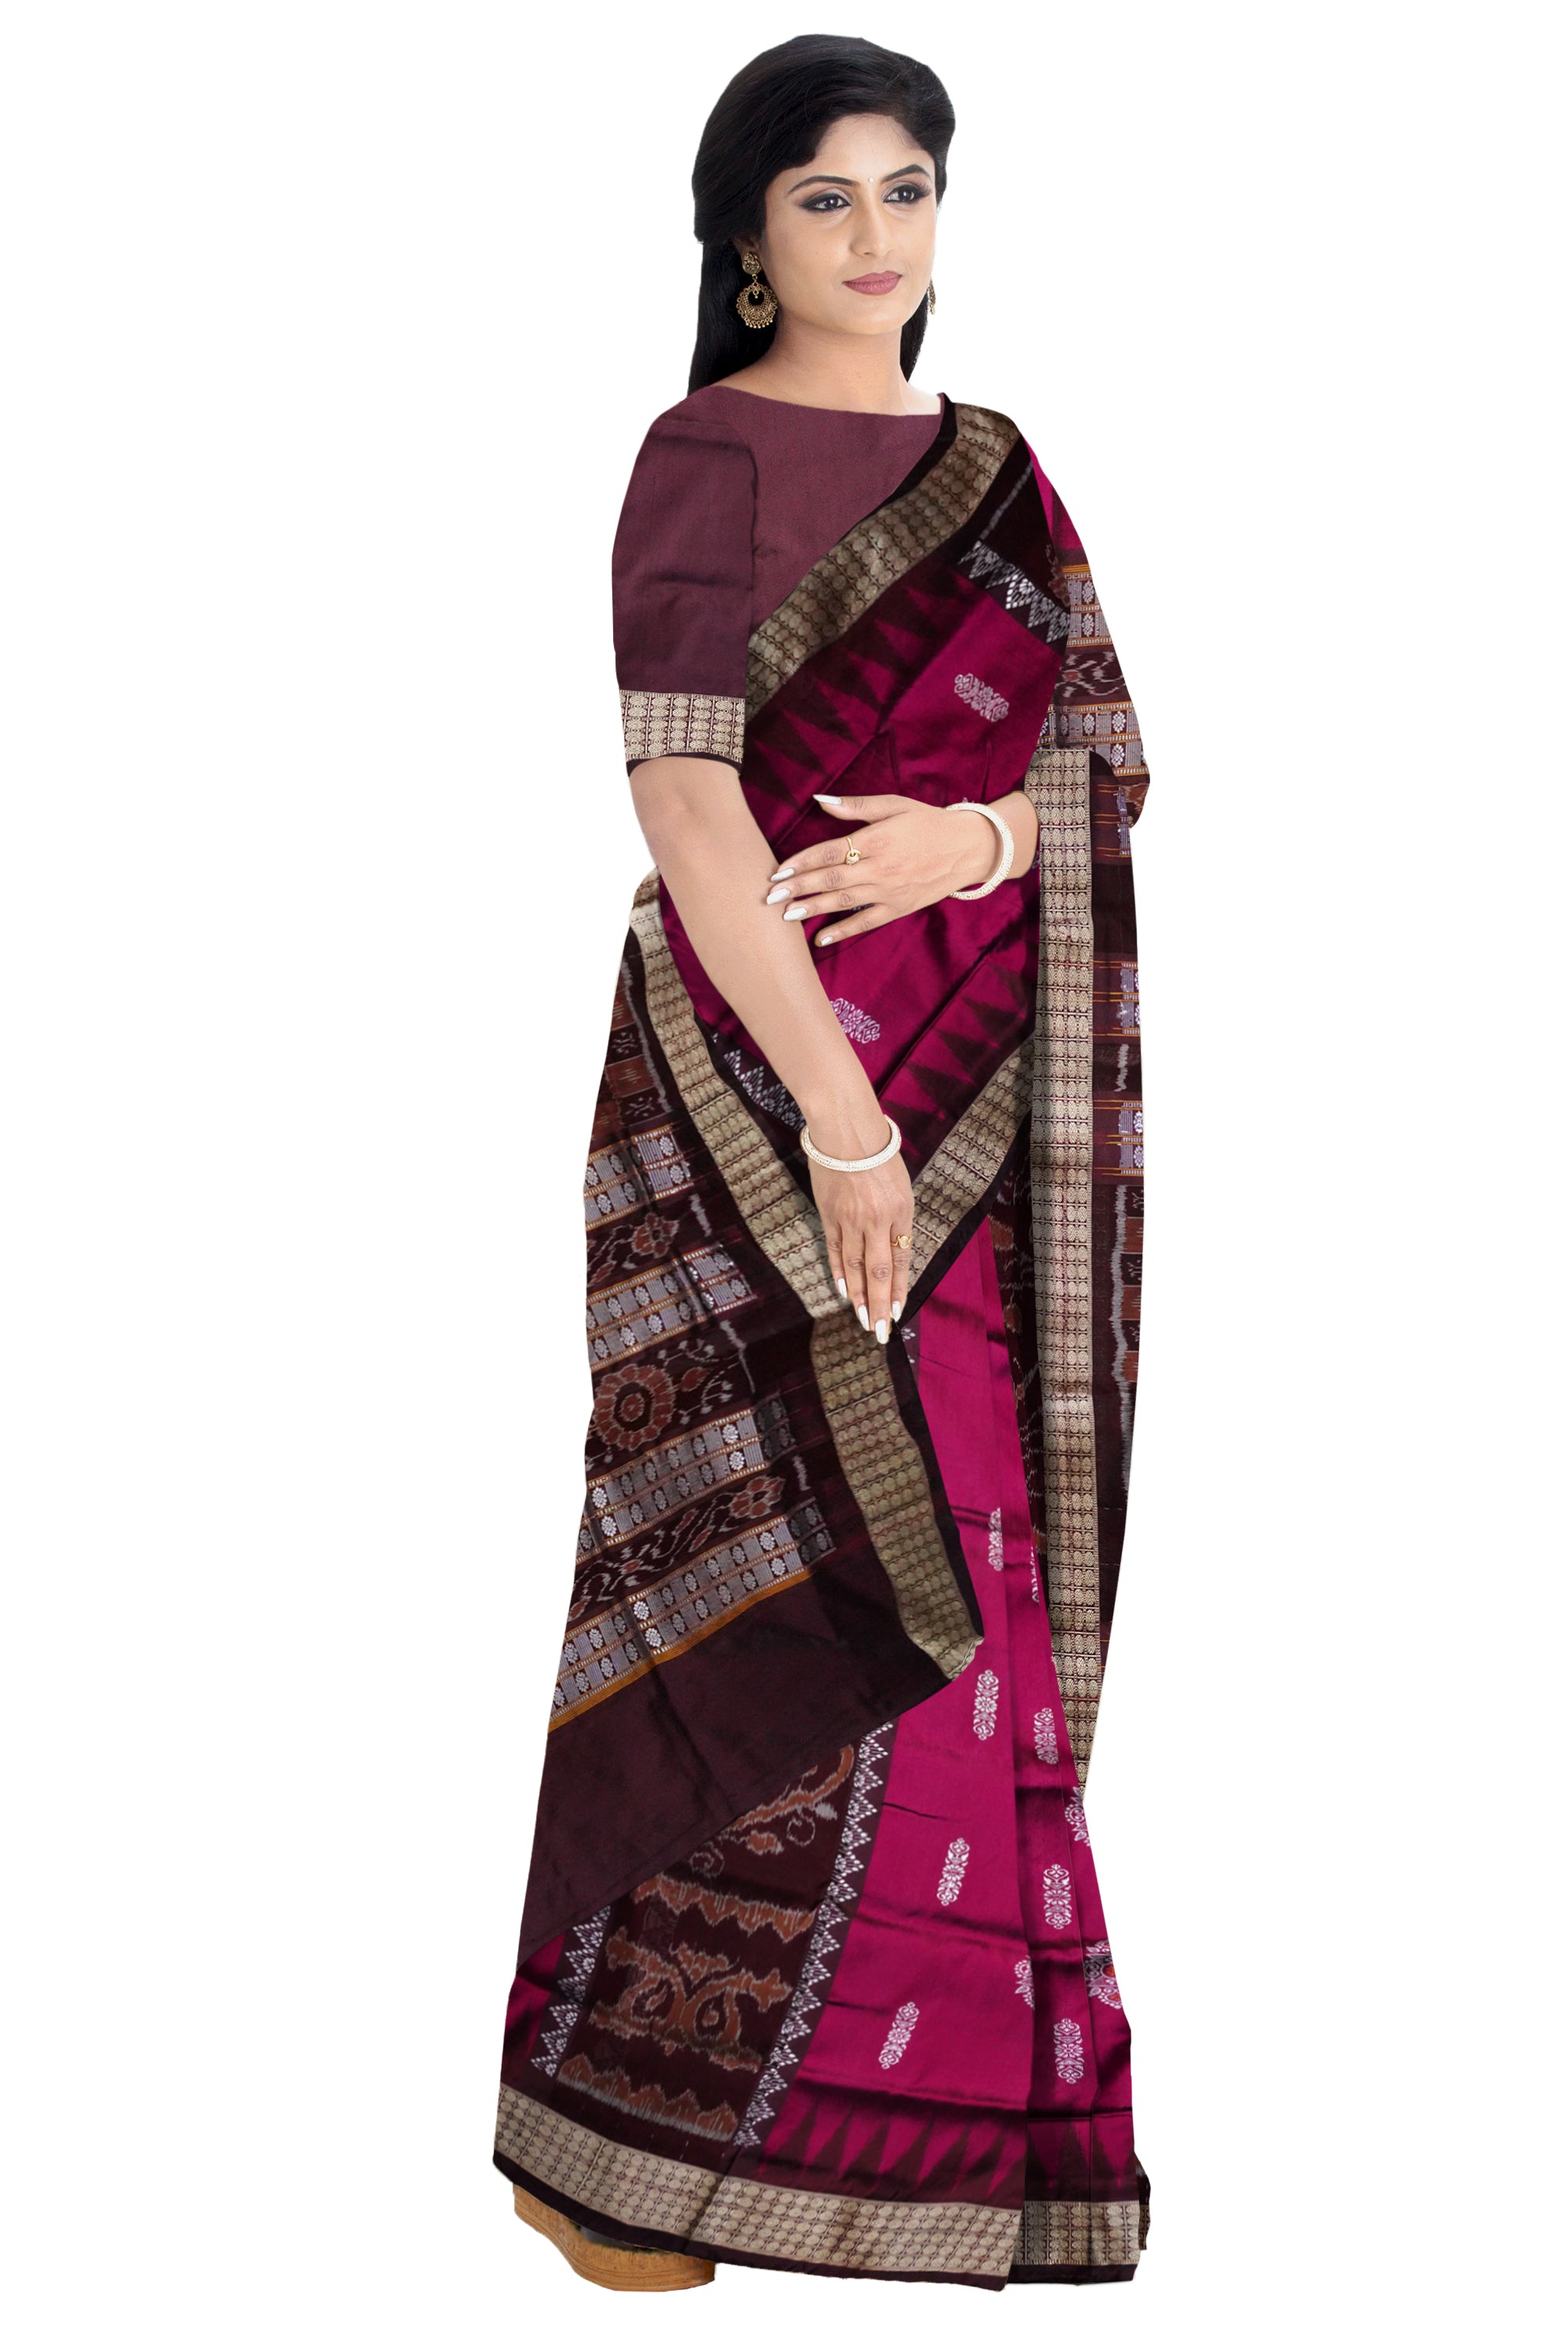 Bomkei with bandha pattern pata saree in Pink and Coffee color. - Koshali Arts & Crafts Enterprise